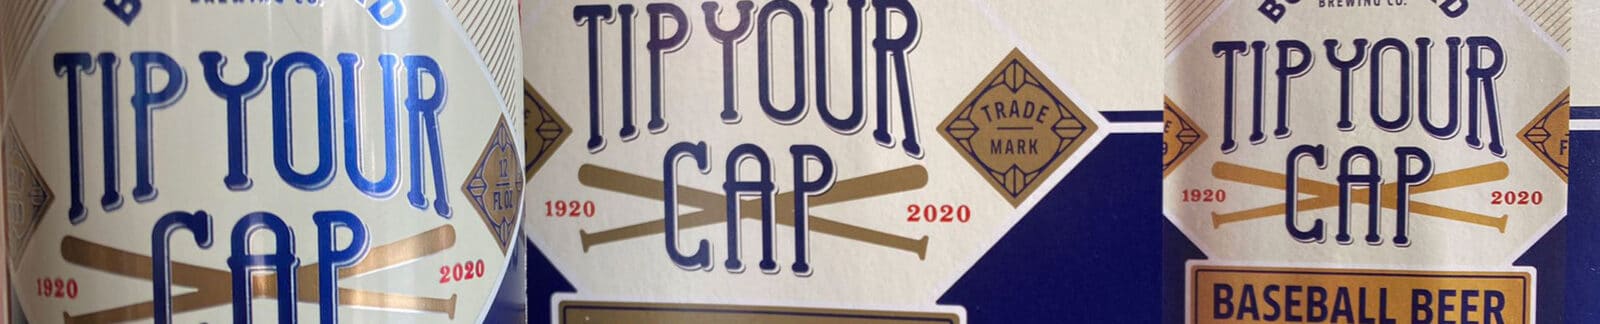 Boulevard Brewing – Tip Your Cap Baseball Beer header